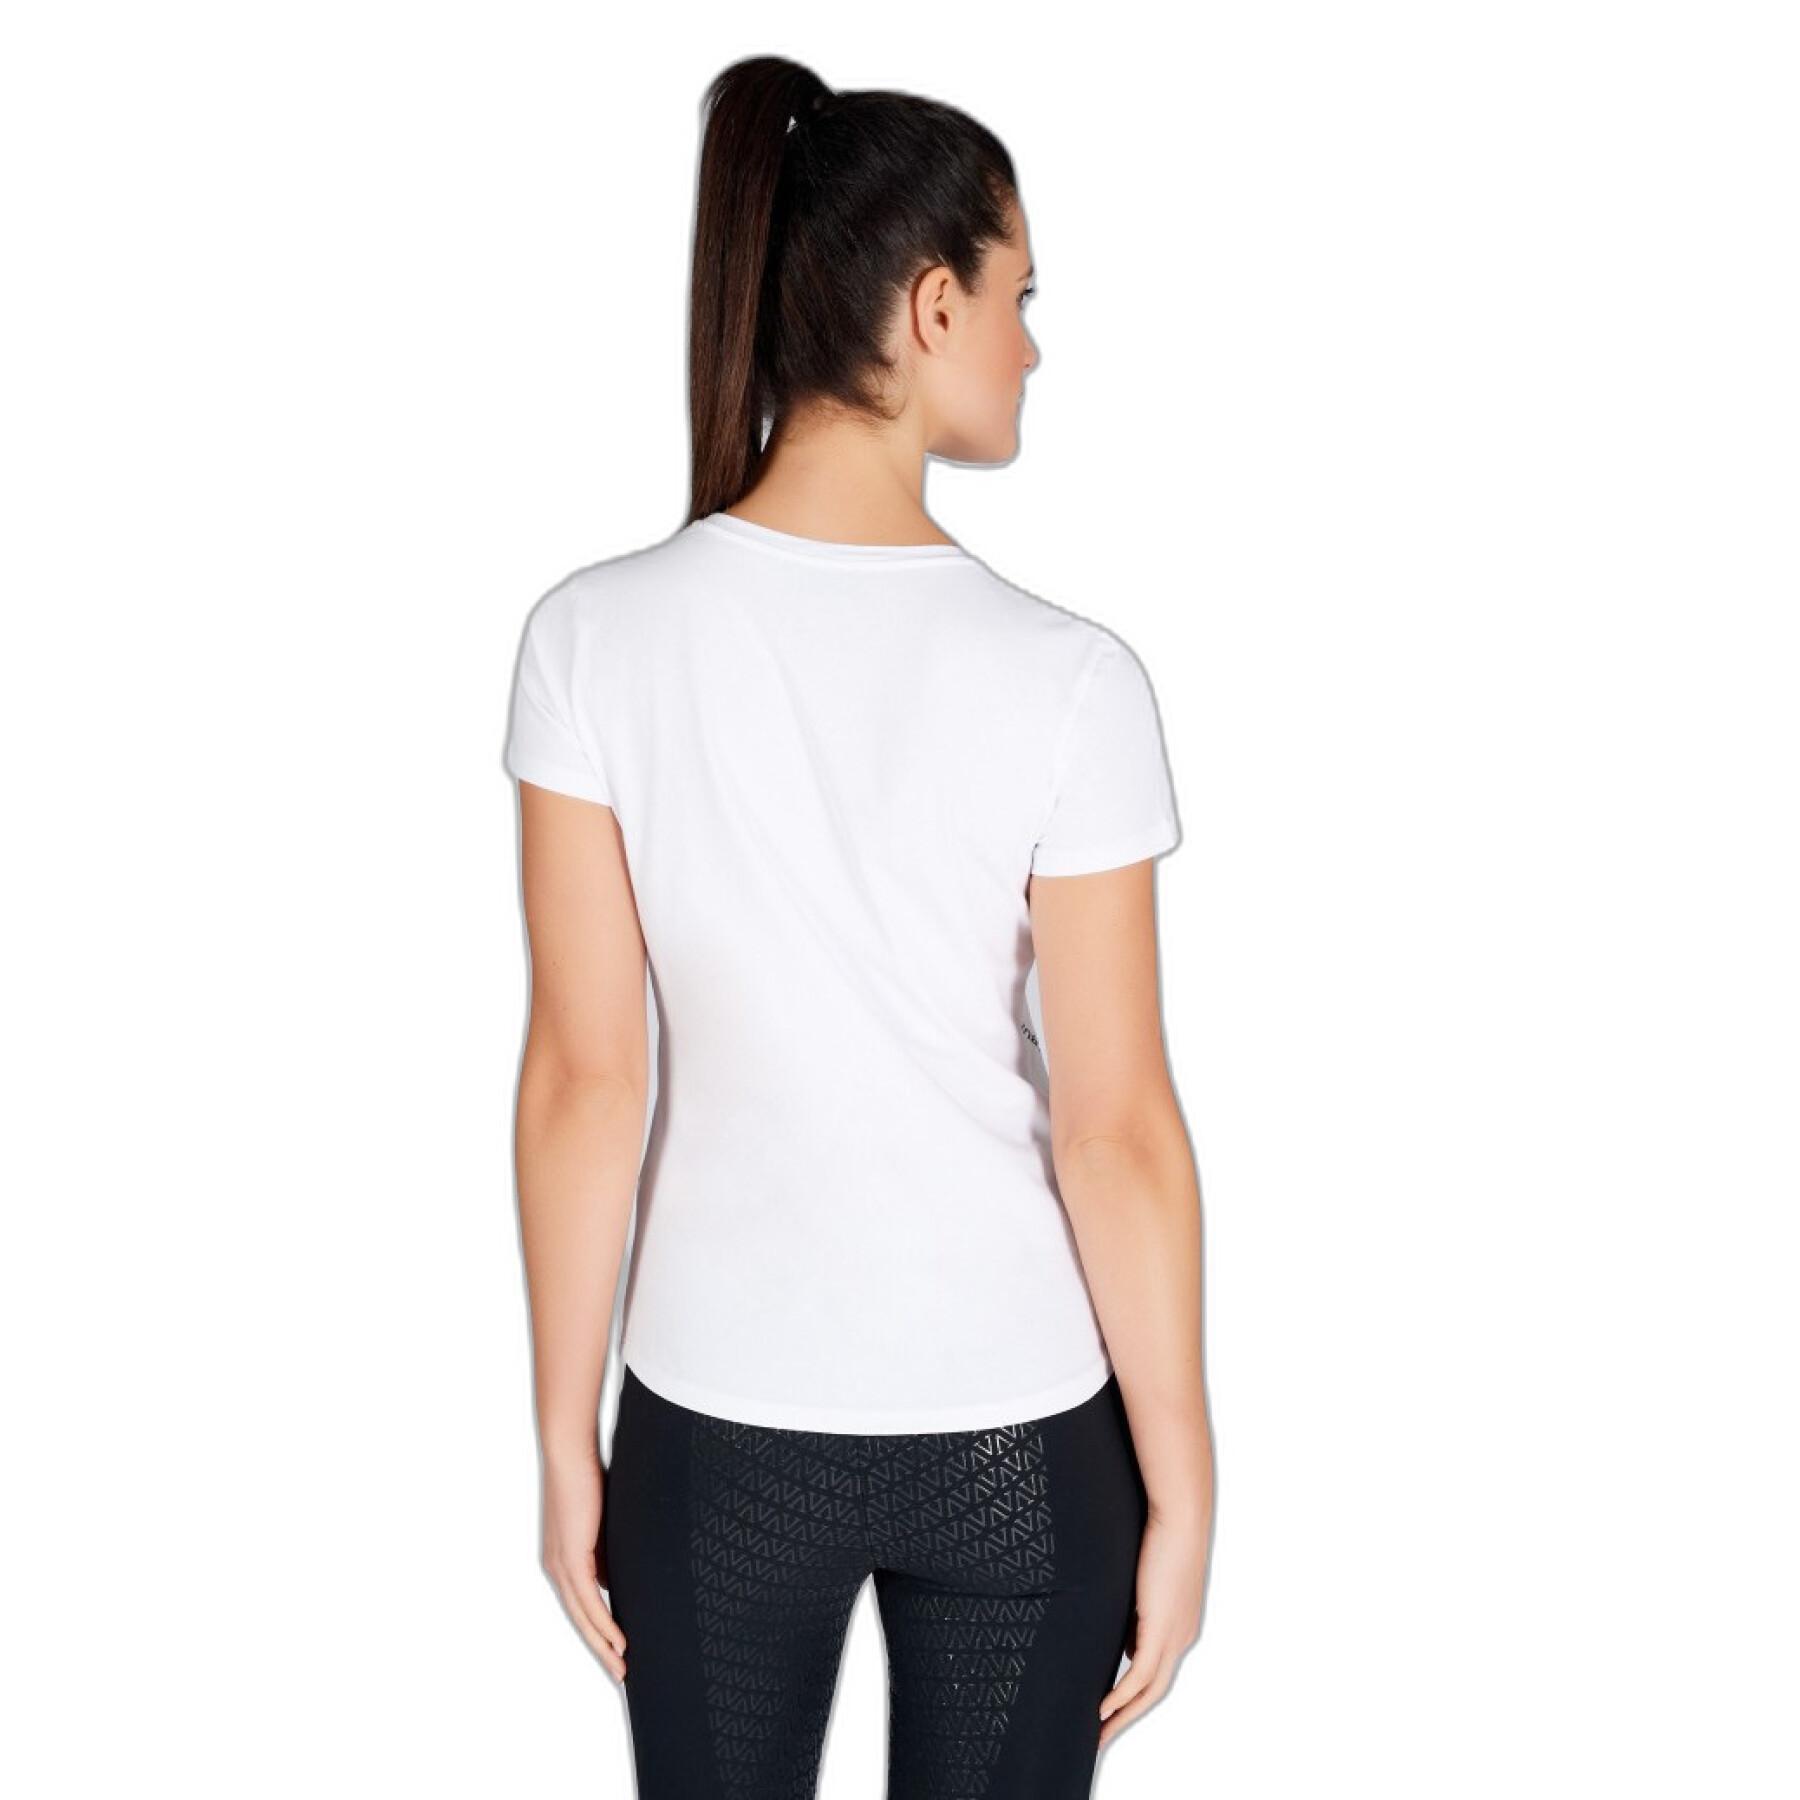 T-shirt de mulher Vestrum Lipari Printed